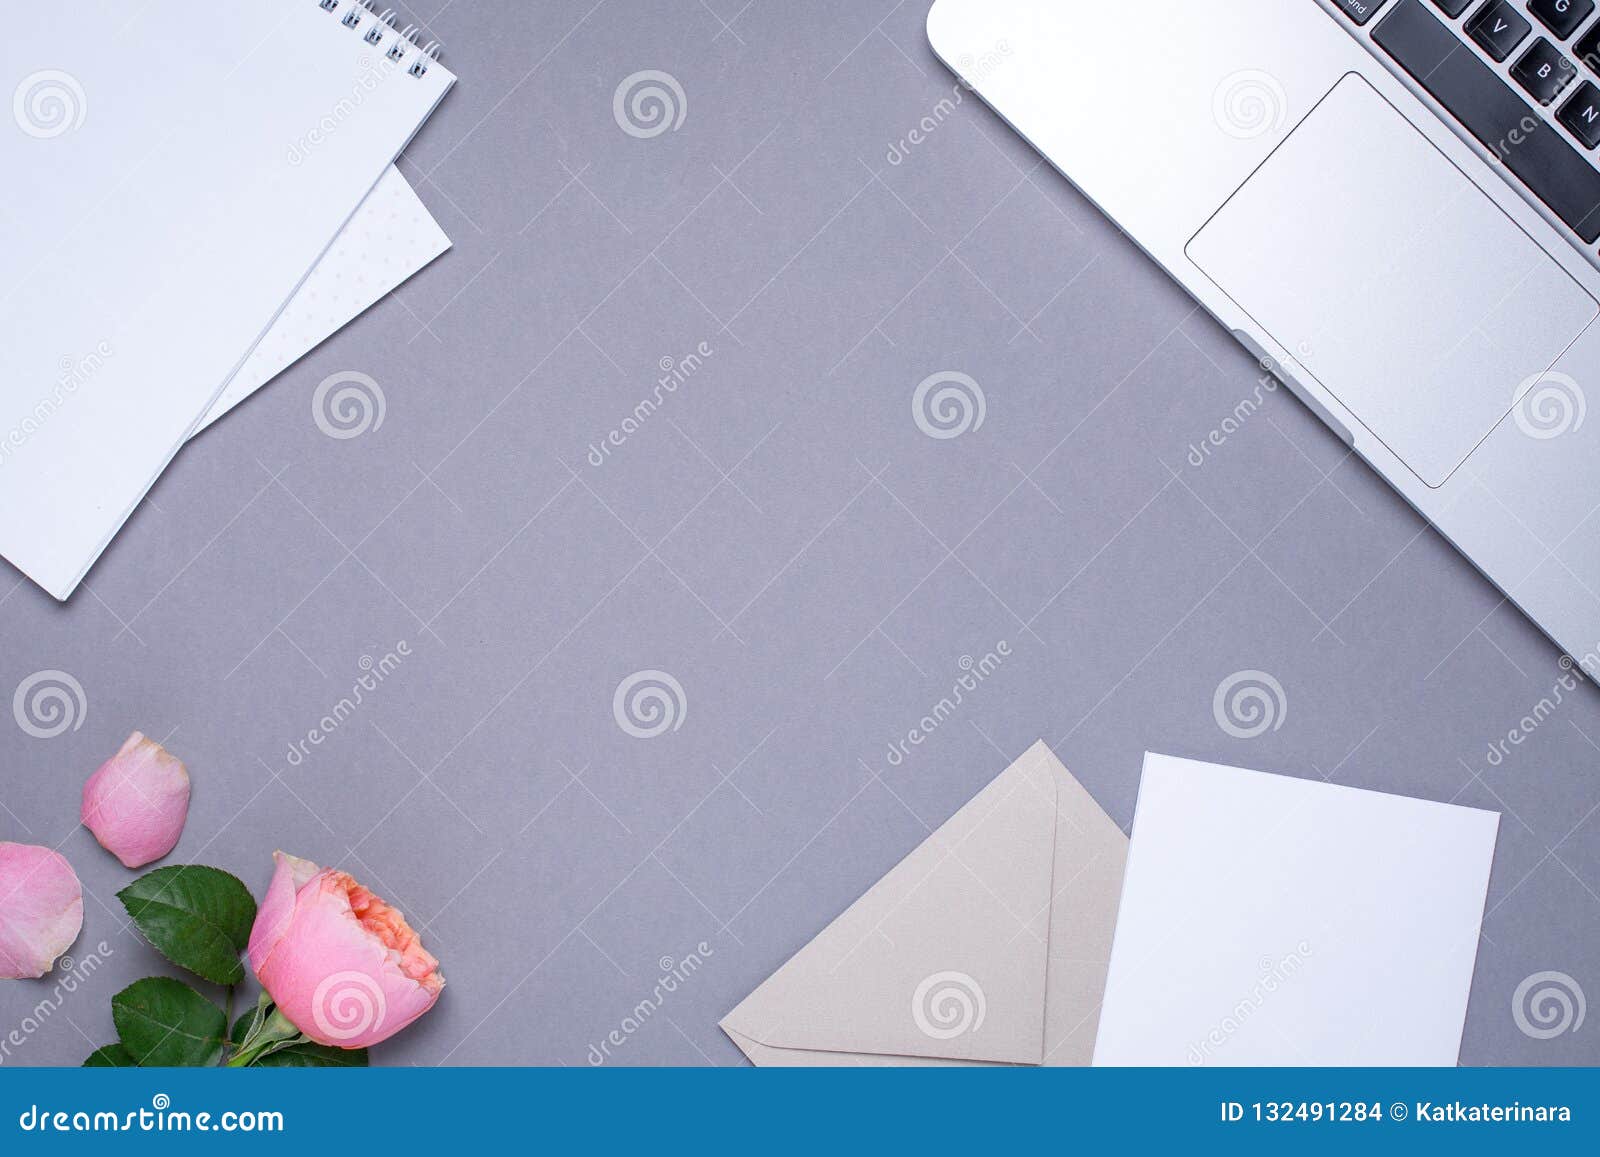 Download Wallpaper Laptop Pink Hd Cikimm Com